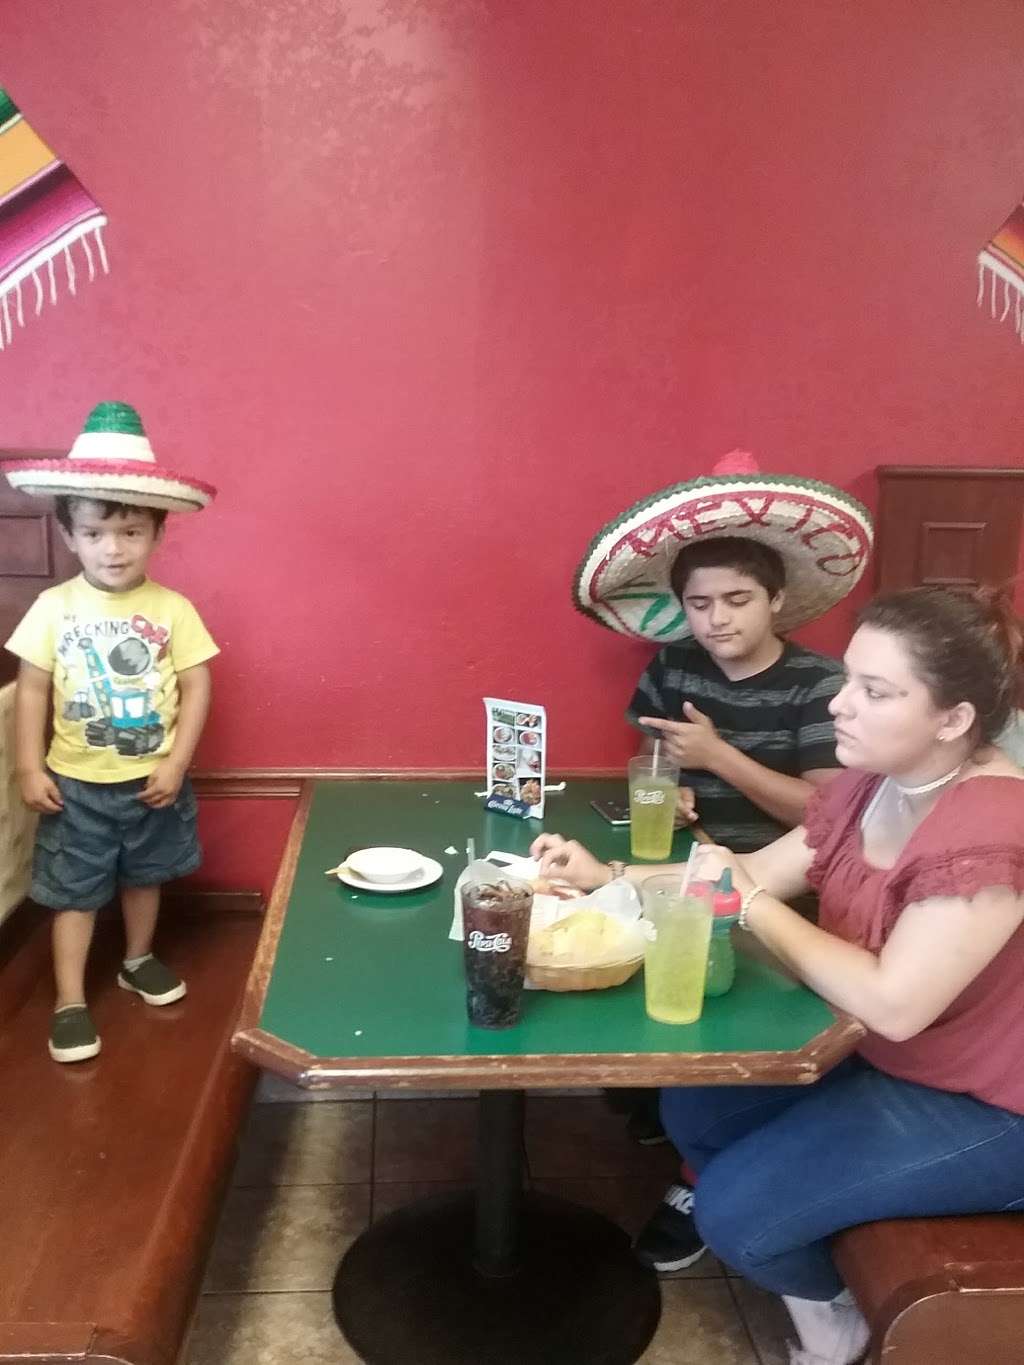 El Primo Mexican Restaurant | 1423 Salisbury Rd, Statesville, NC 28625, USA | Phone: (704) 883-7771